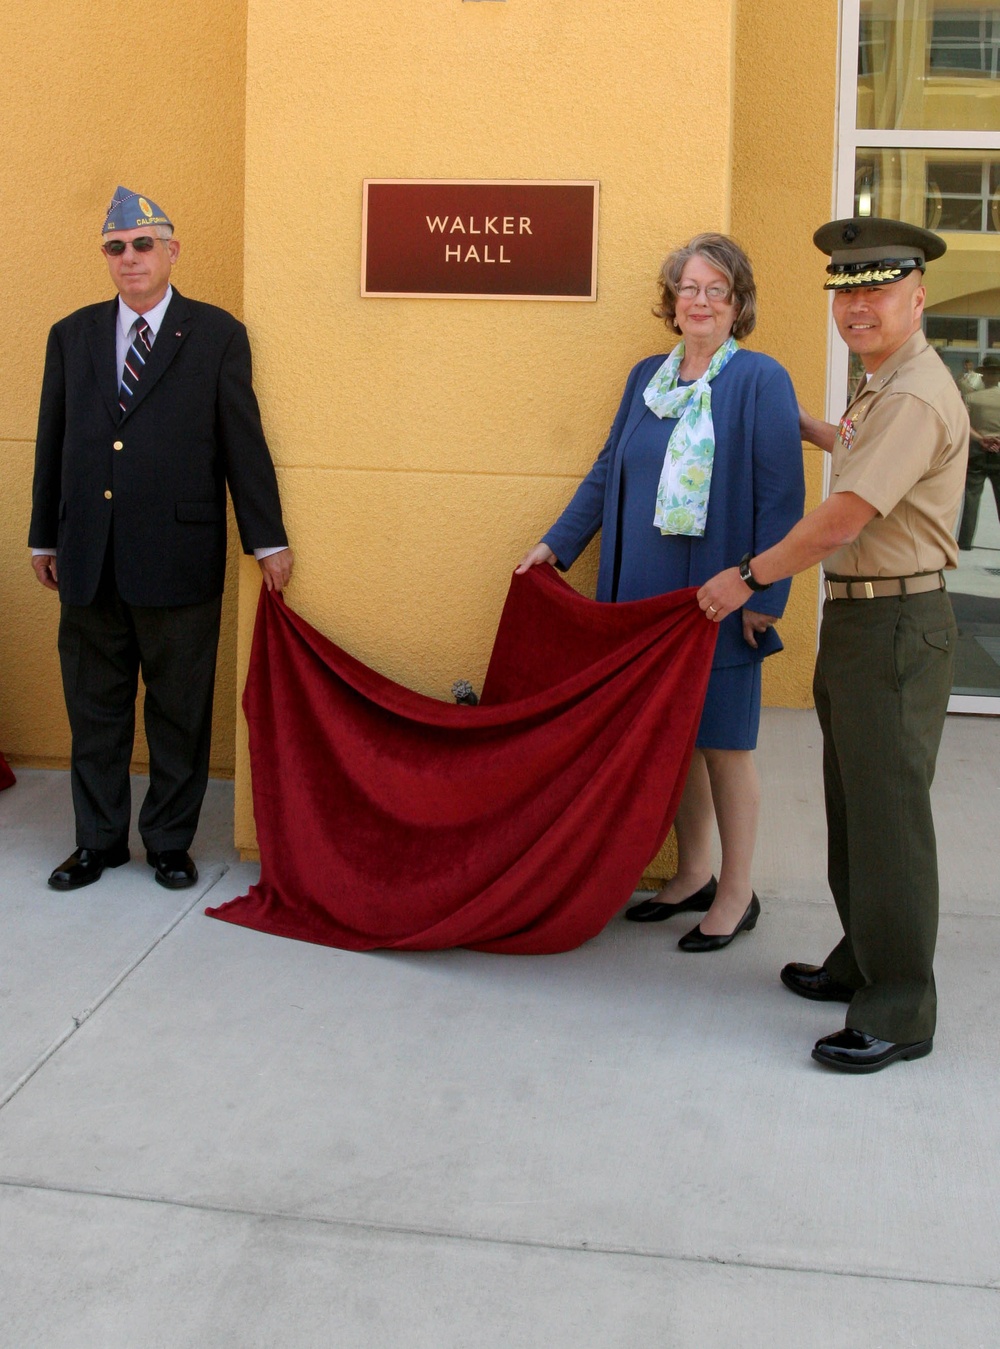 Sports medicine facility dedicated to fallen Marine